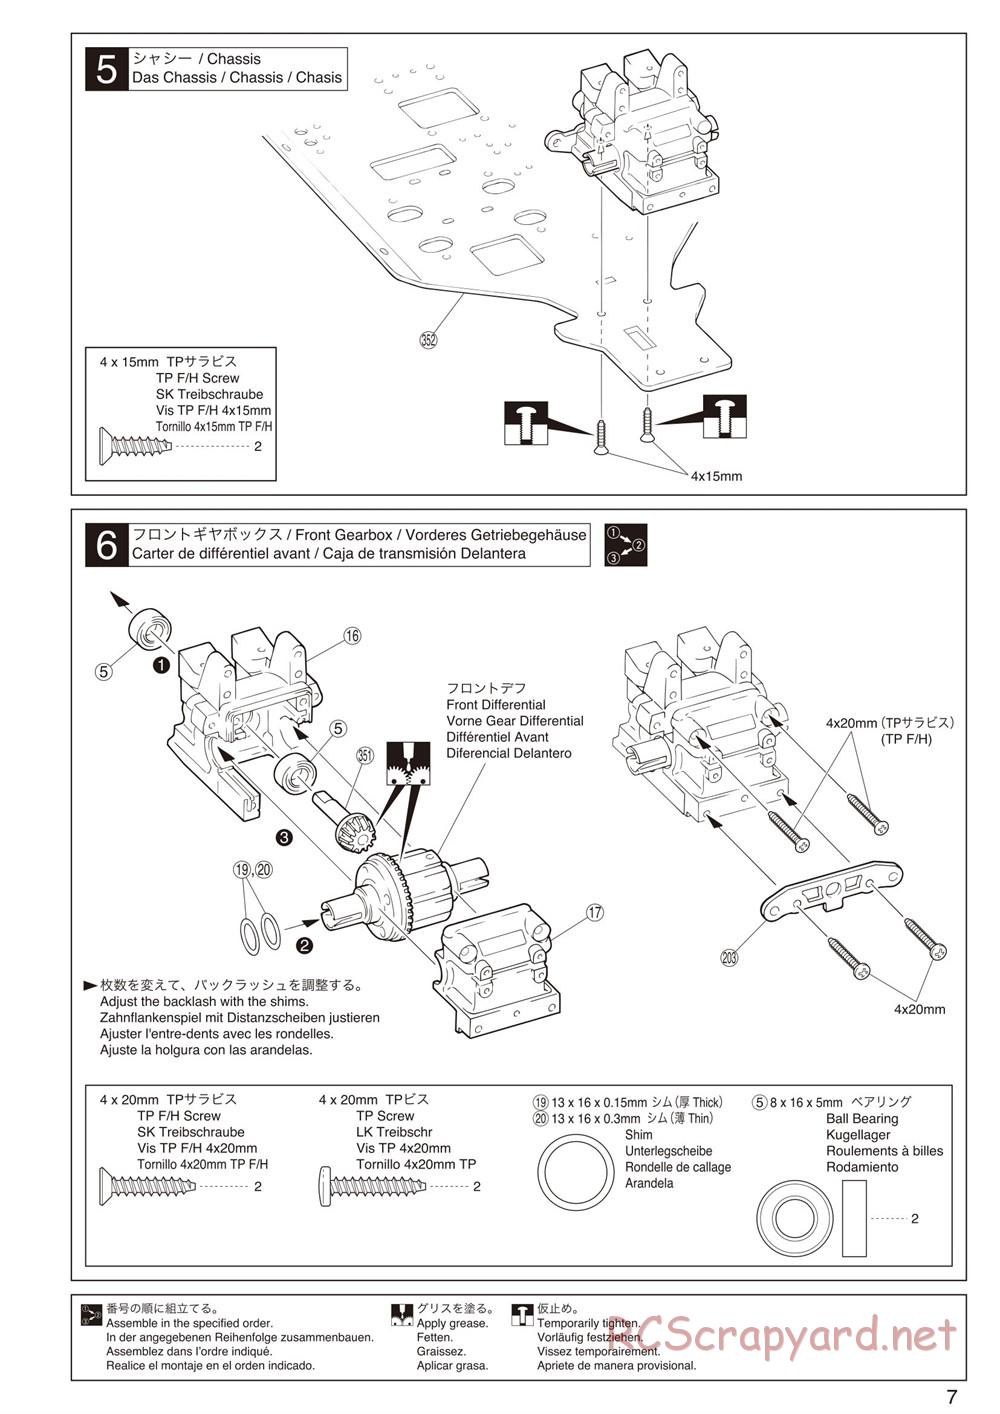 Kyosho - Inferno NEO ST Race Spec - Manual - Page 7